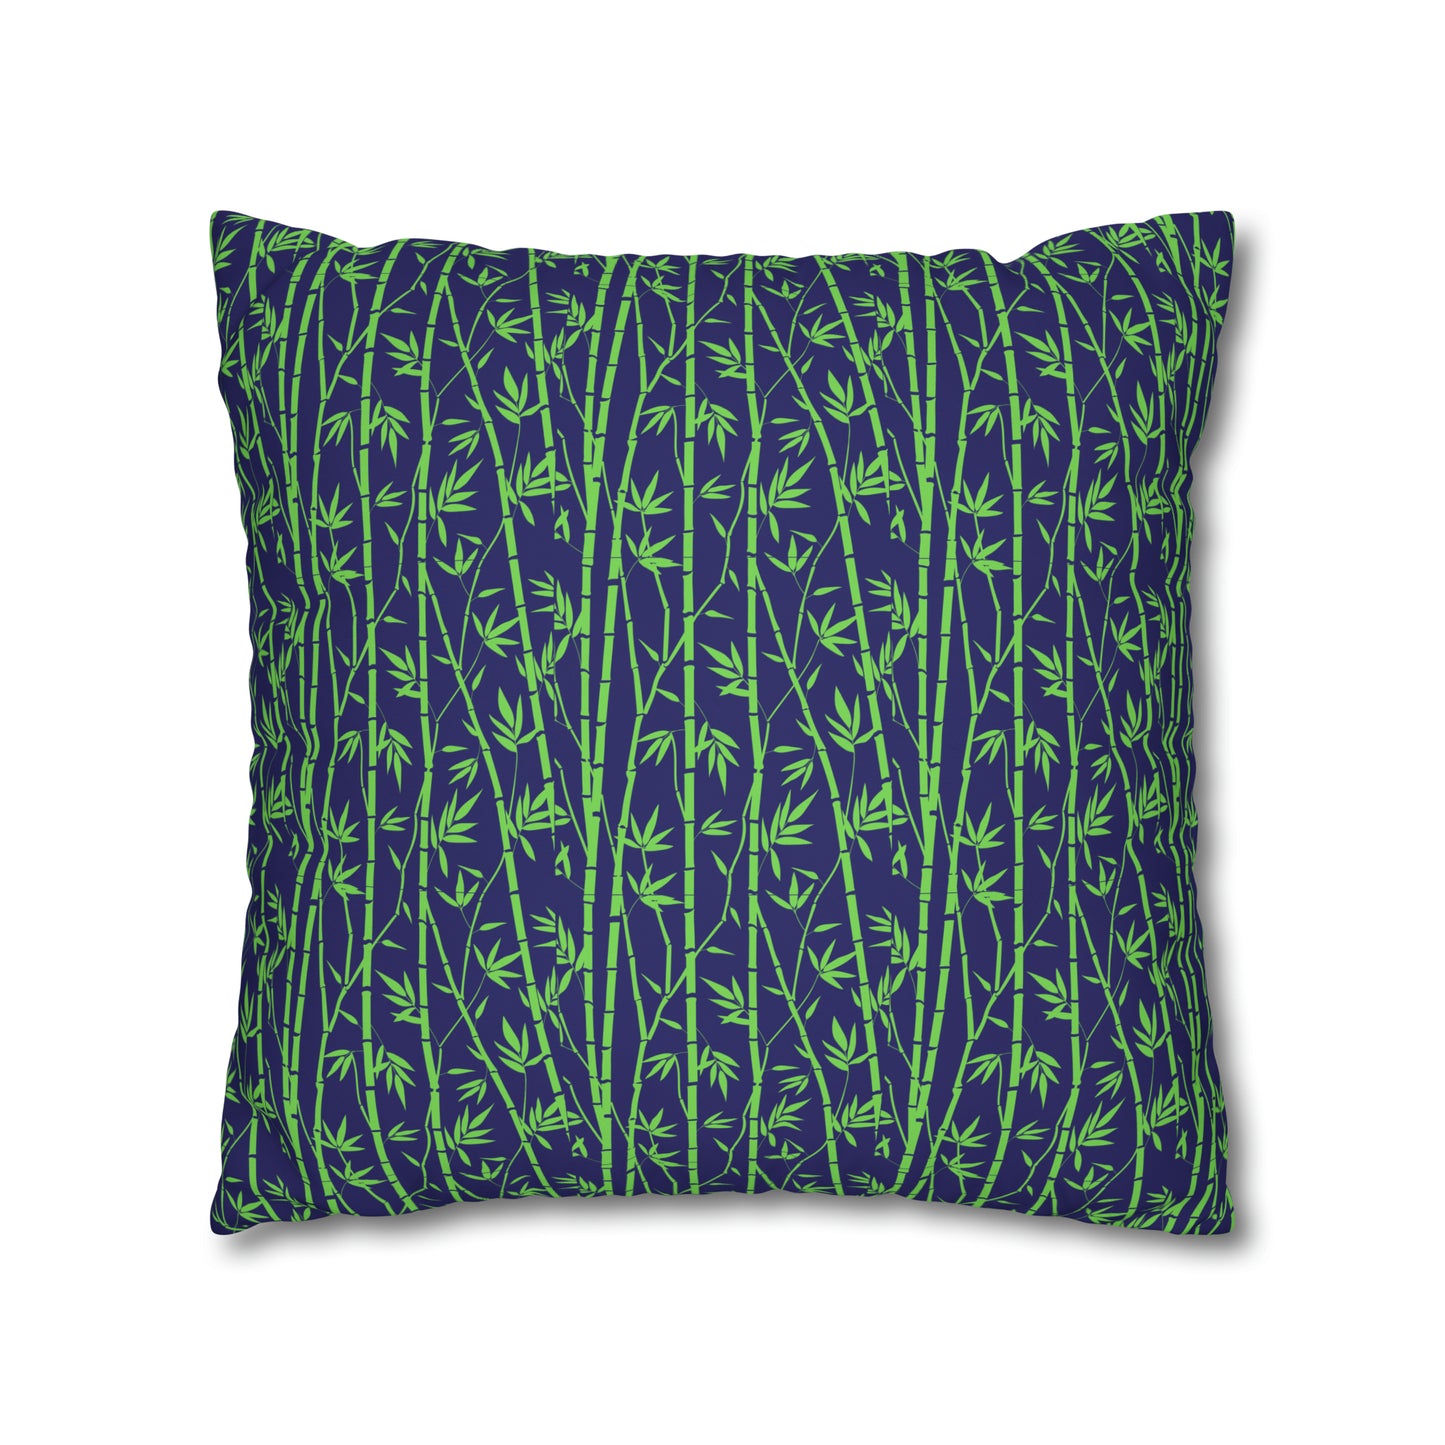 Bamboo Zen Meditation Garden Midnight Blue/Black Decorative Spun Polyester Pillow Cover